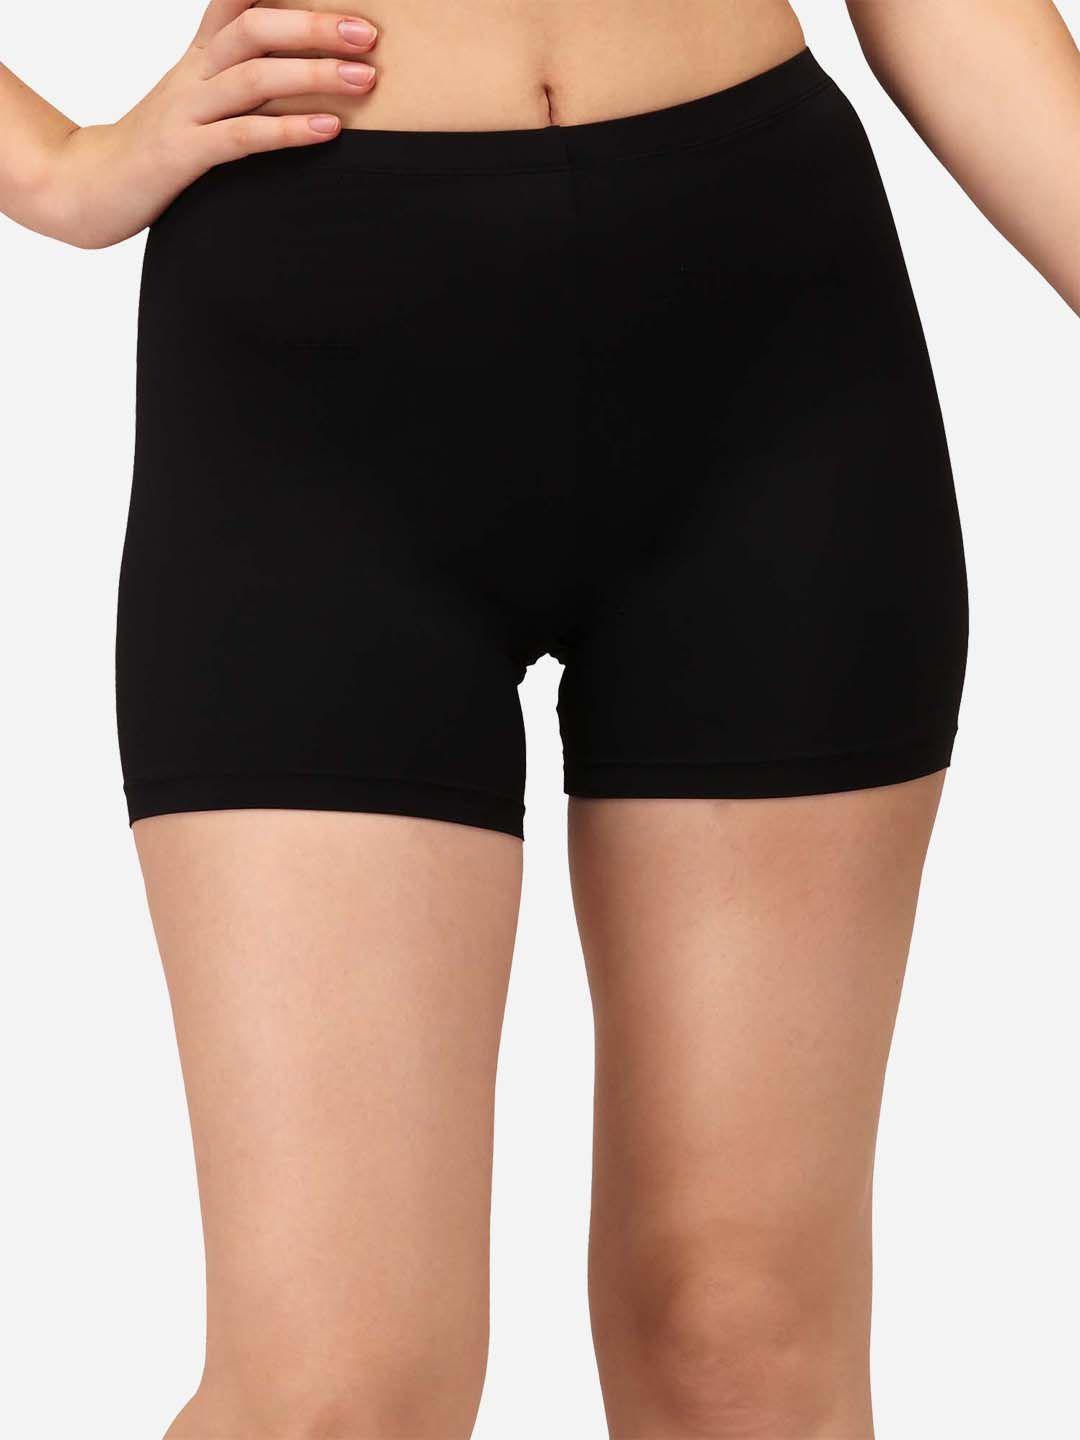 soie-women-black-skinny-fit-cycling-sports-shorts